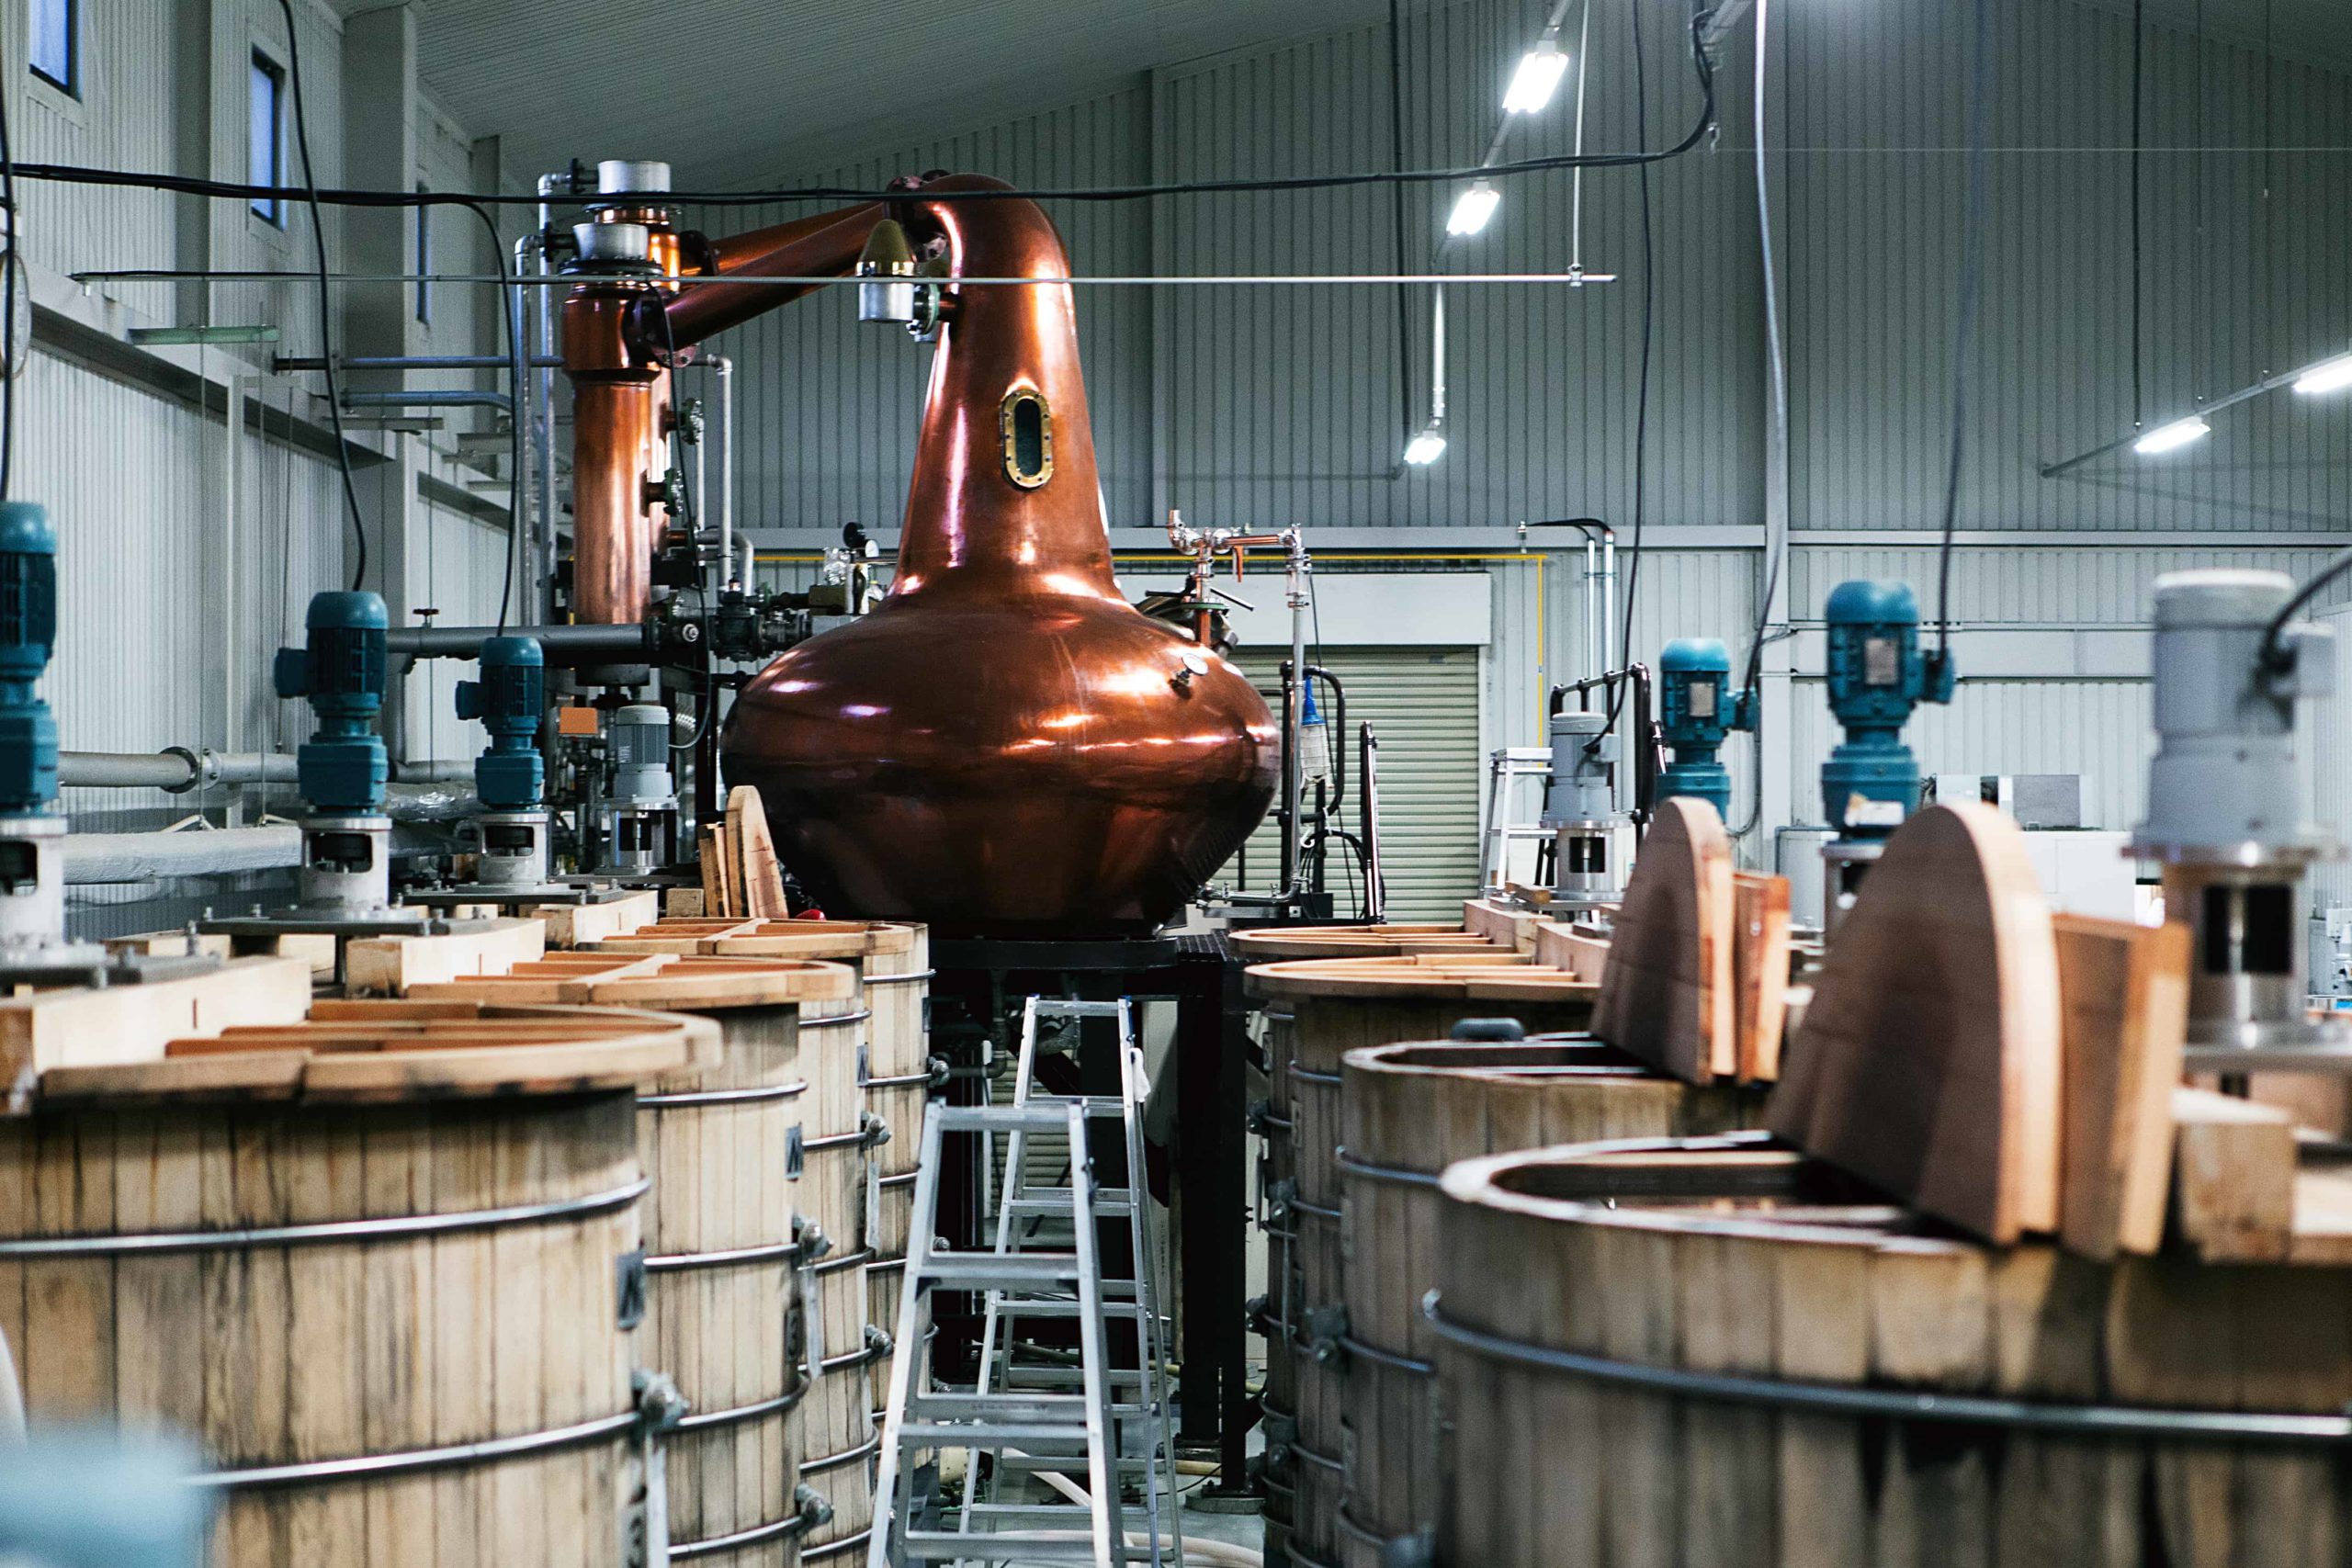 whiskey distillery to visit in japan